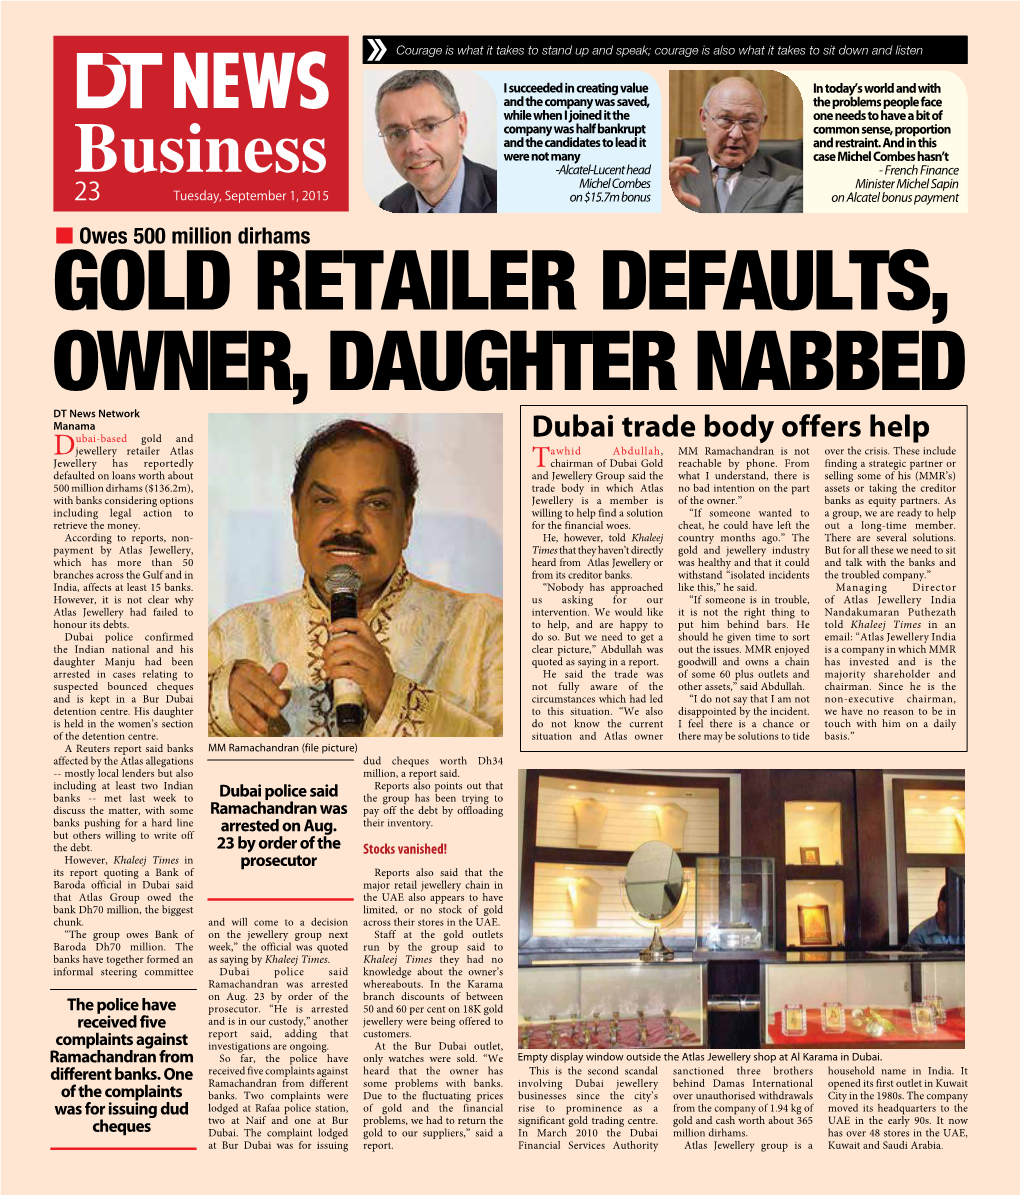 Gold Retailer Defaults, Owner, Daughter Nabbed